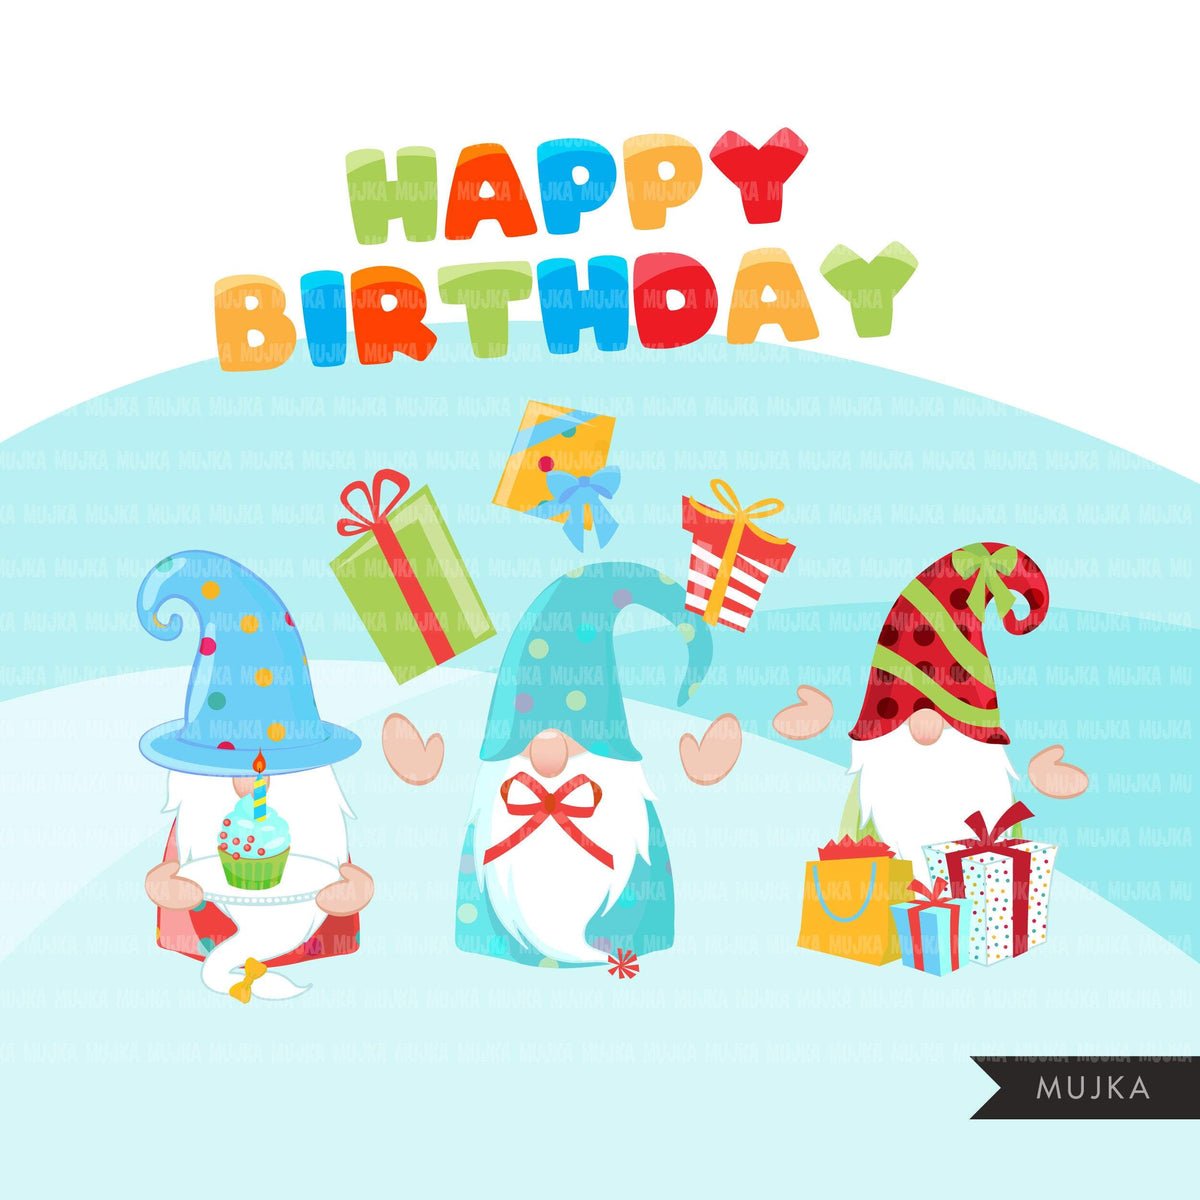 Download Birthday gnomes Clipart, birthday graphics, colorful party Gnome graph - MUJKA CLIPARTS